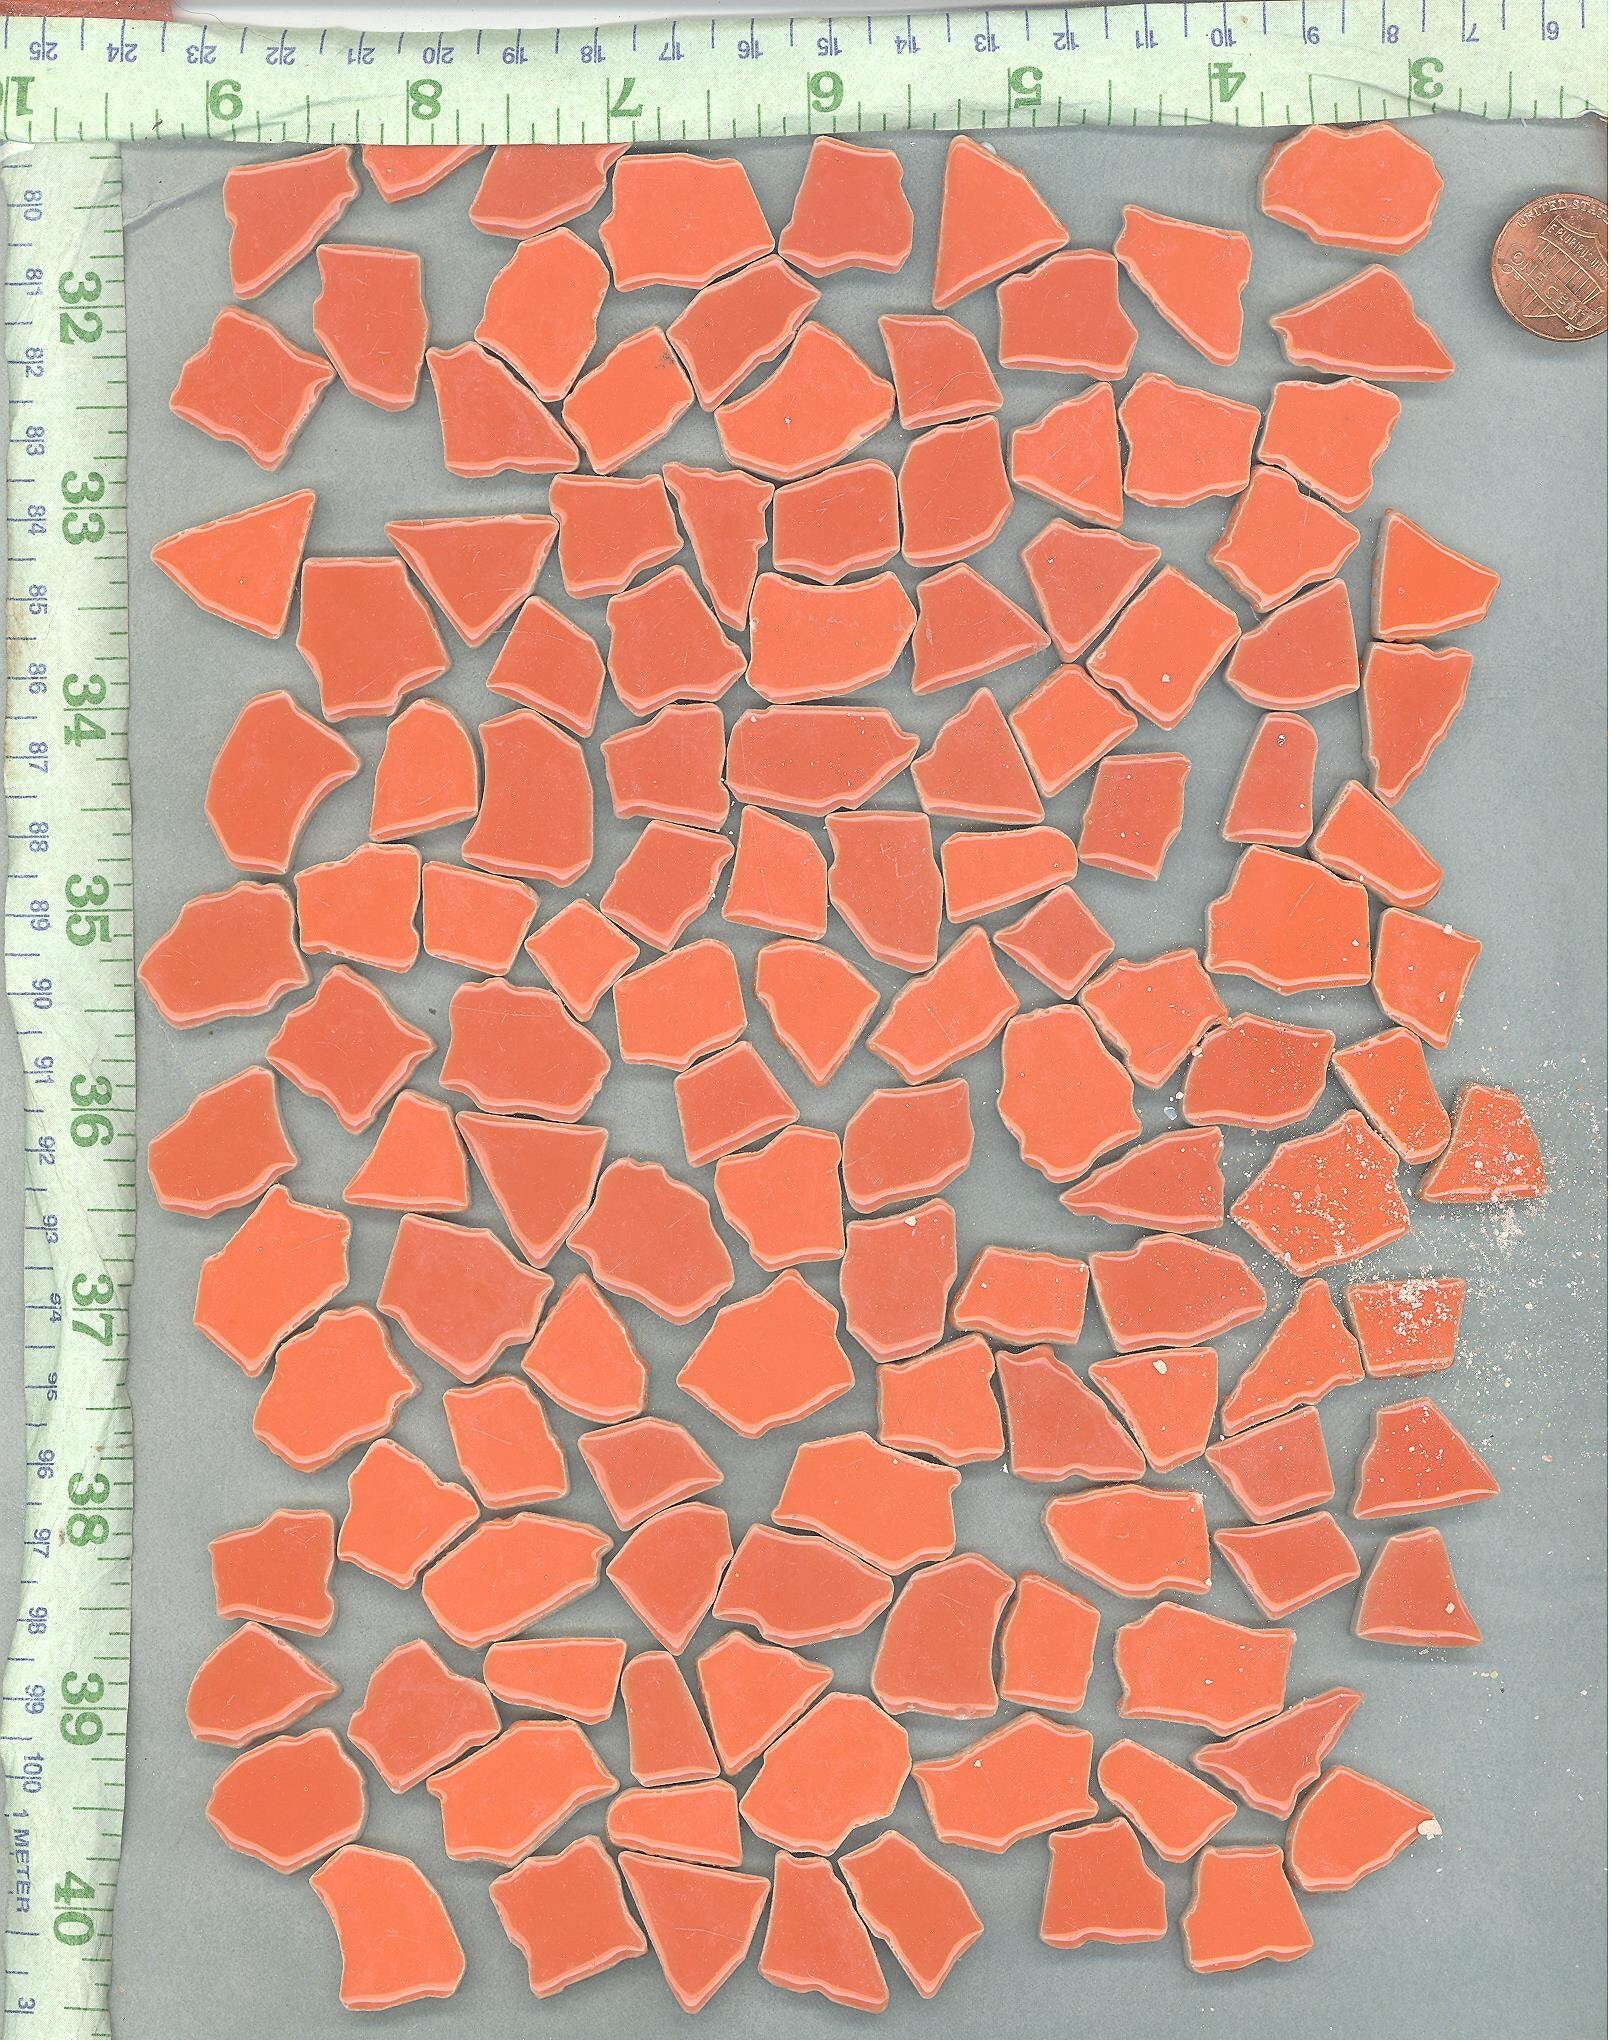 Orange Mosaic Ceramic Tiles - Random Shapes - Half Pound - Assorted Sizes Jigsaw Pieces